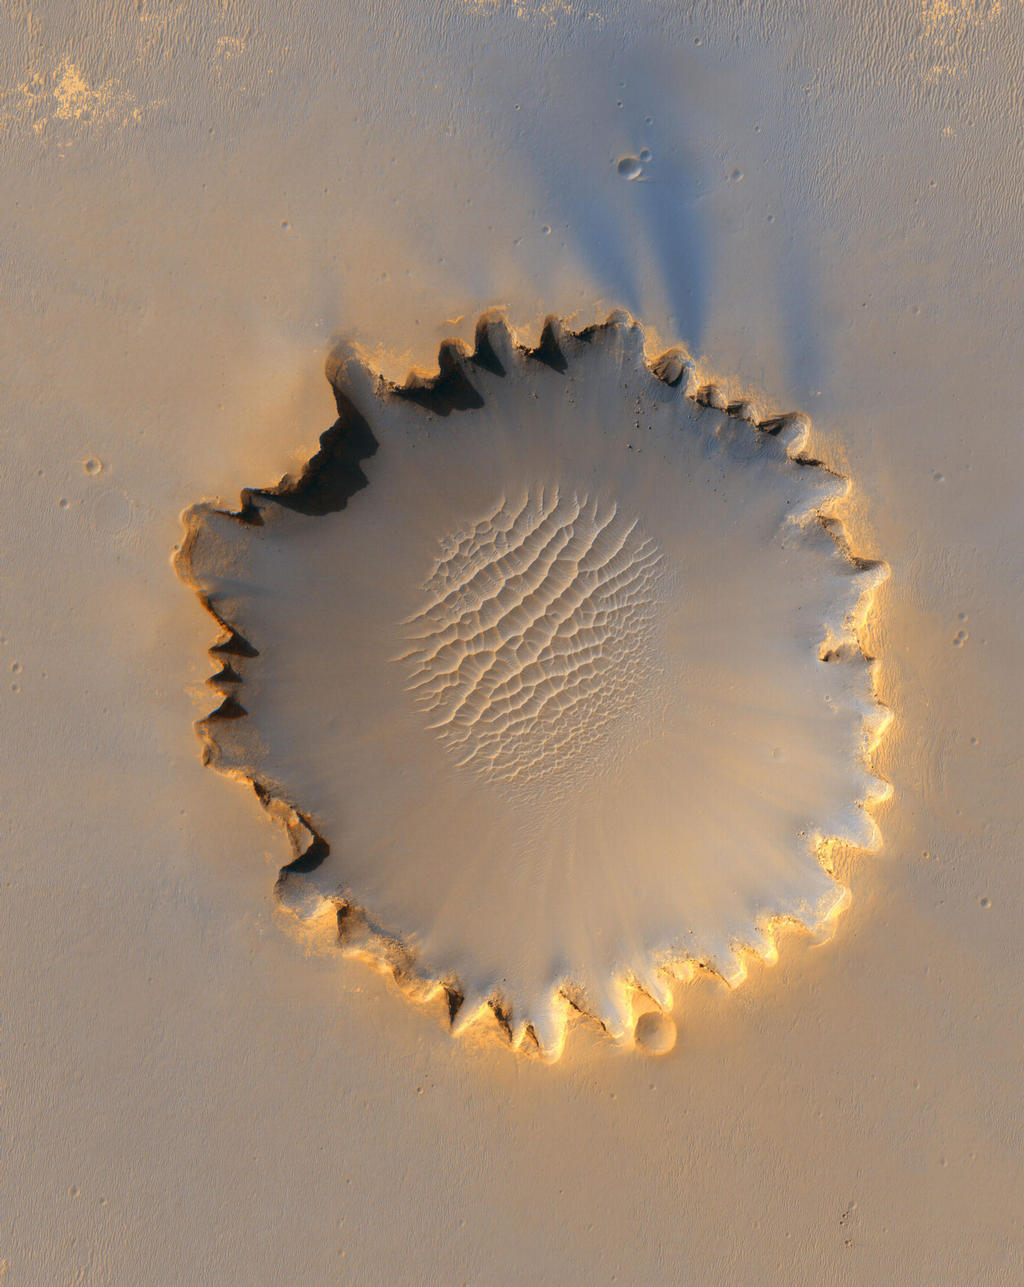 Victoria-Crater-at-Meridiani-Planum-br2.jpg